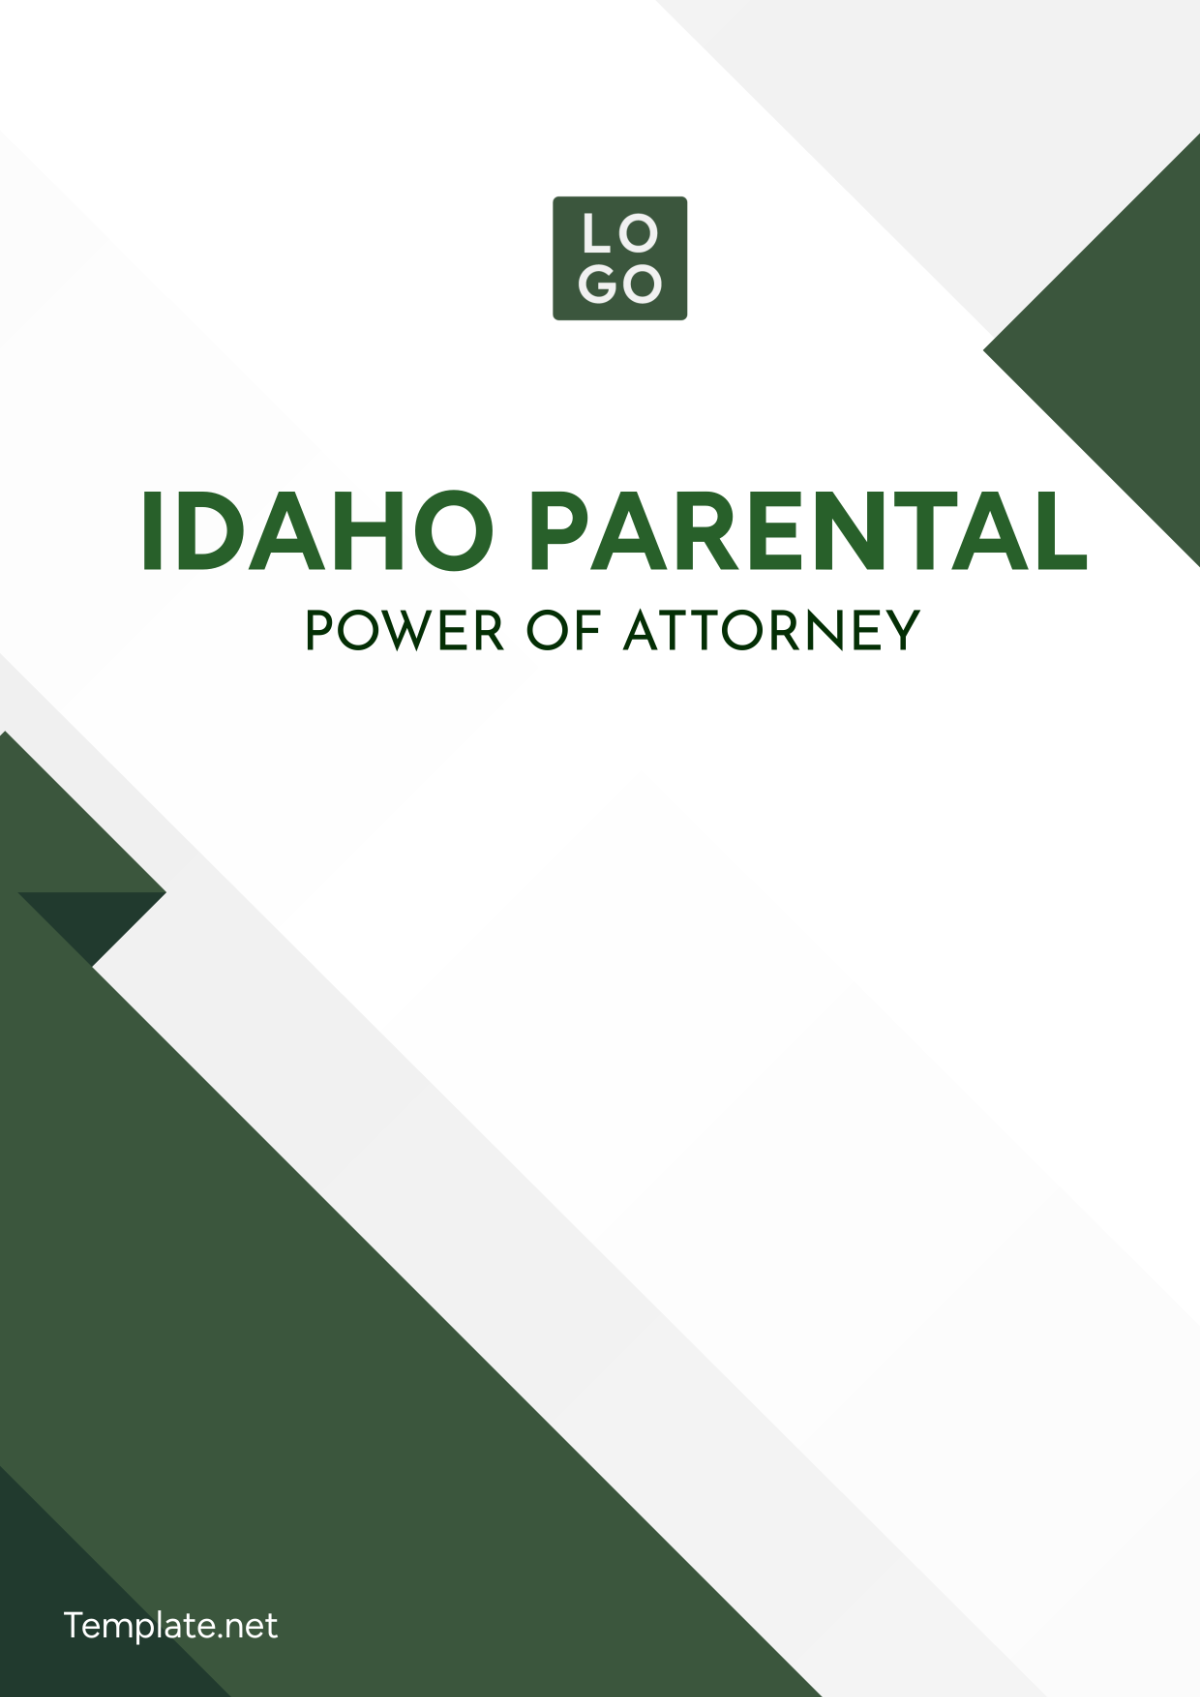 Idaho Parental Power of Attorney Template